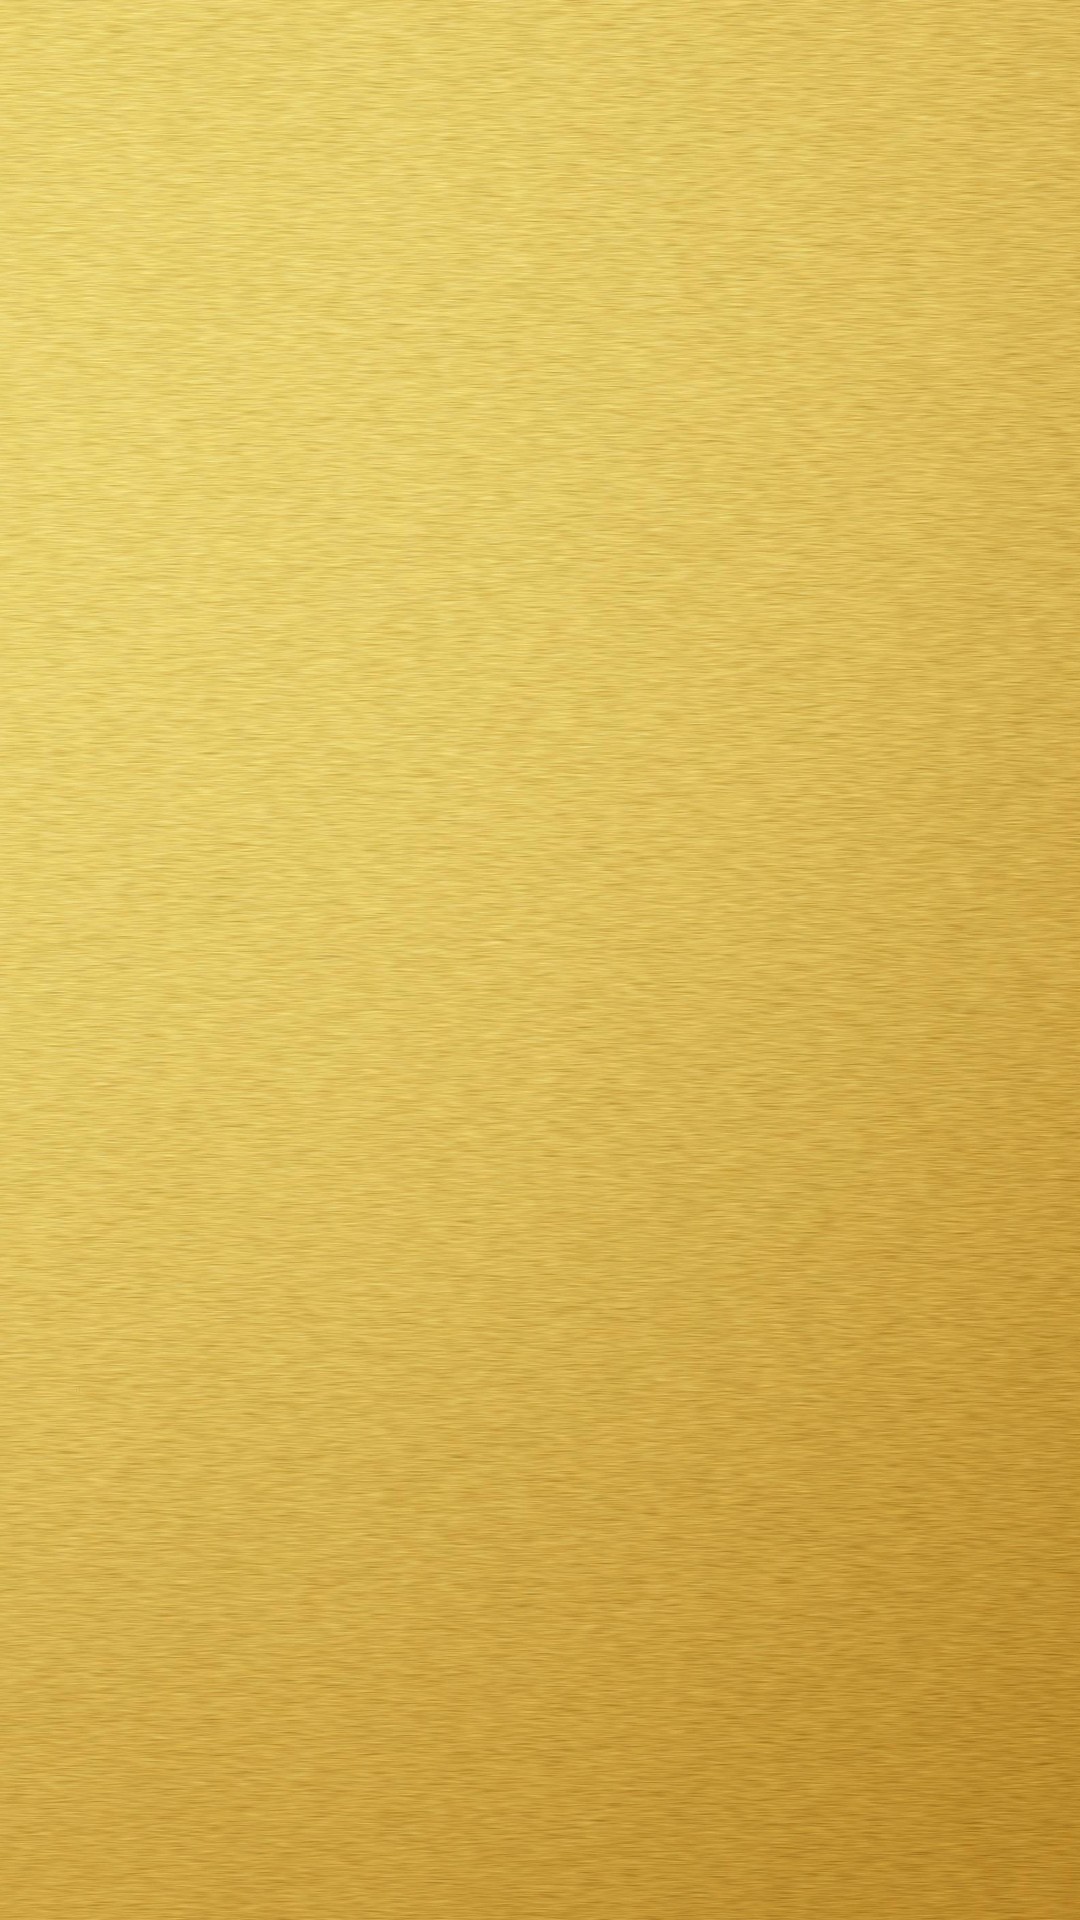 Wallpaper Plain Gold iPhone resolution 1080x1920